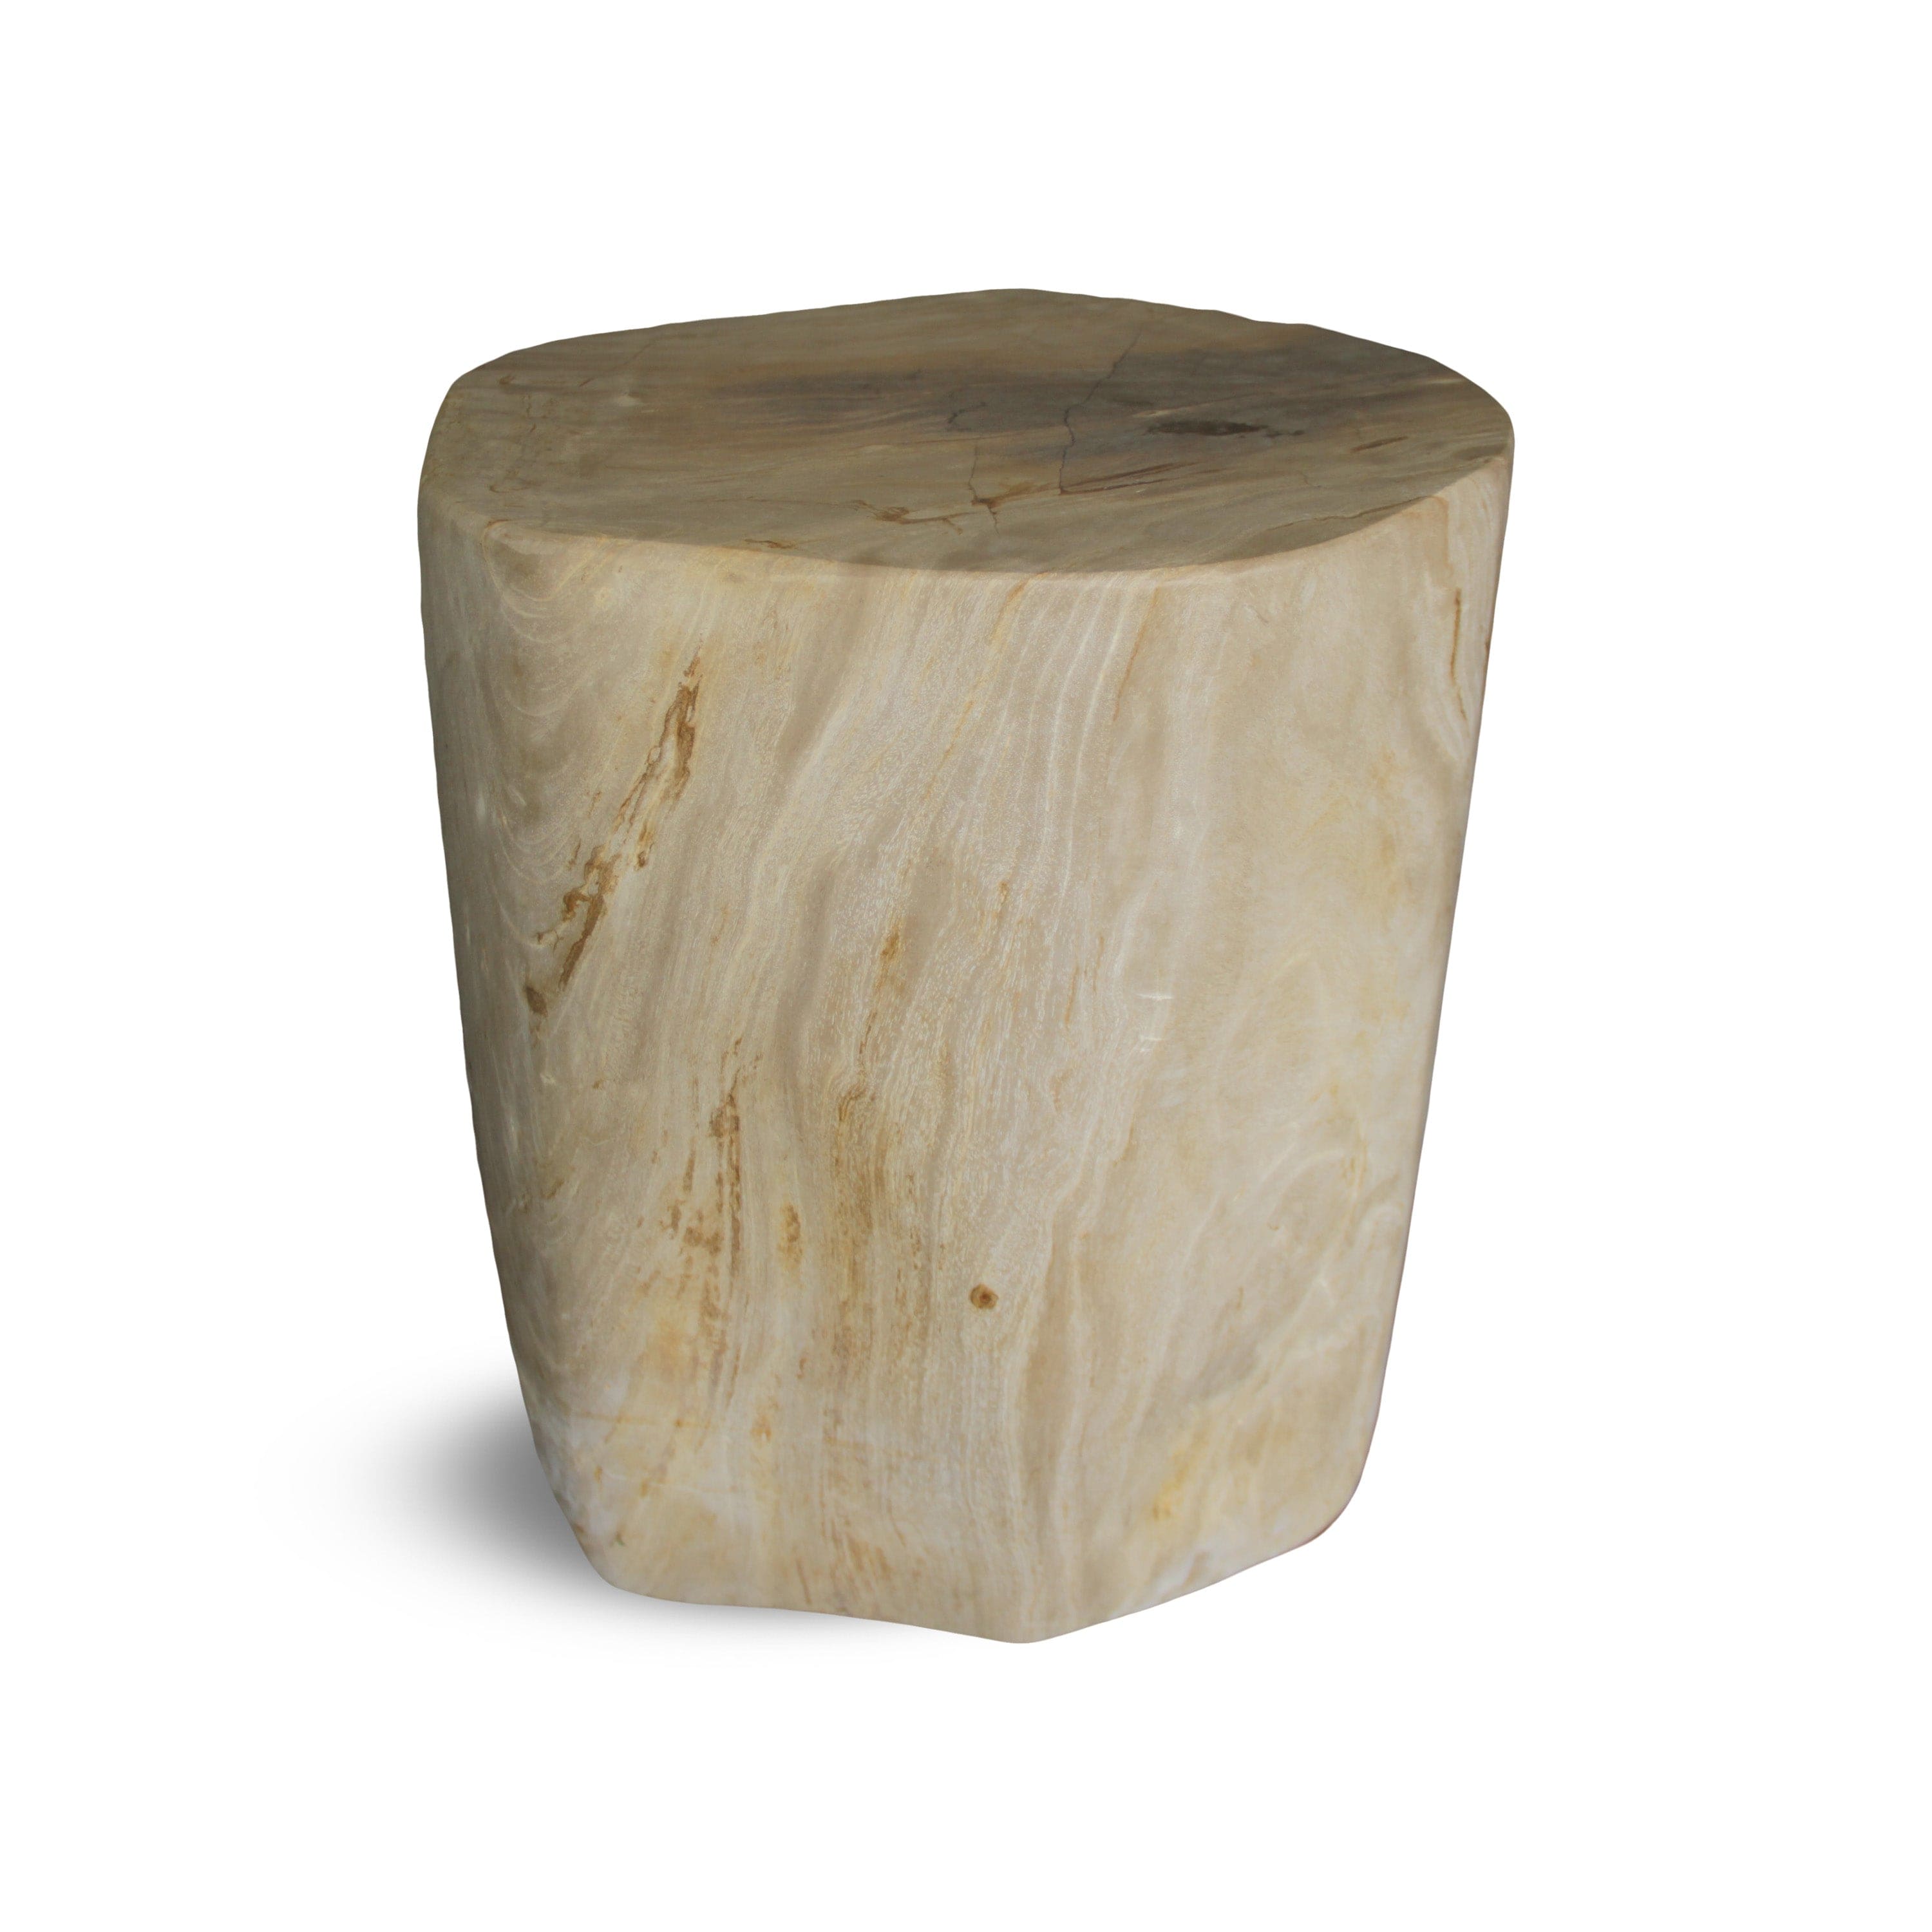 Kalifano Petrified Wood Petrified Wood Round Stump / Stool from Indonesia - 16" / 167 lbs PWS3200.006